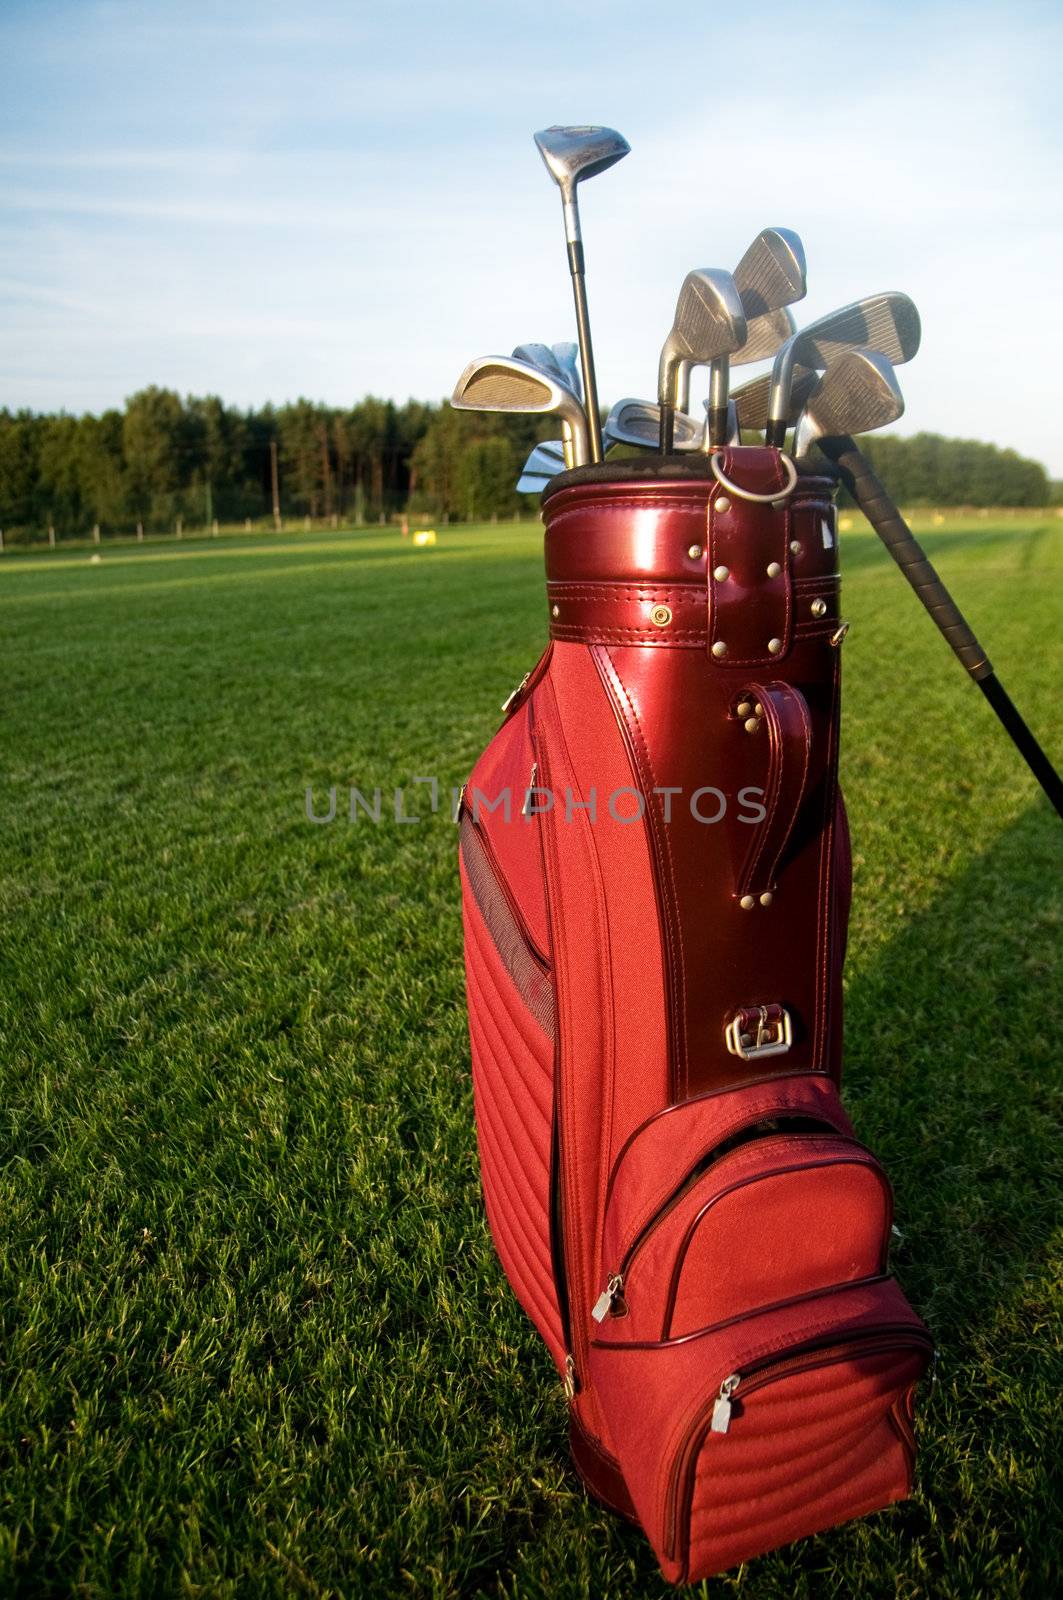 Professional golf gear on the golf field.